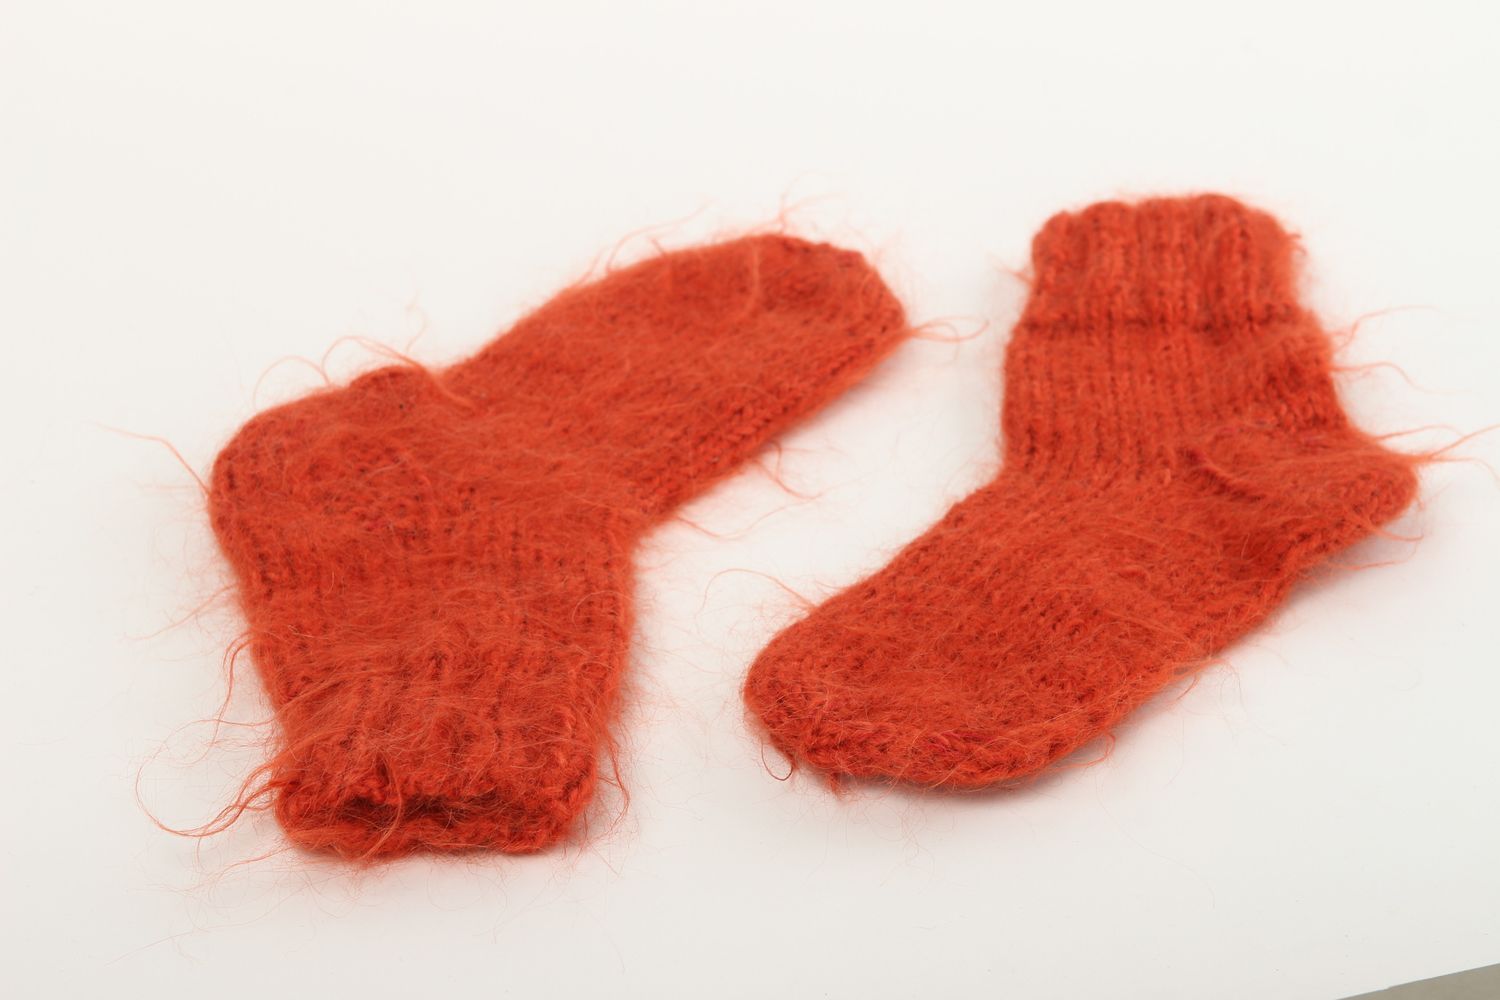 Homemade knitted socks best woolen socks winter clothing heat socks cool gifts photo 3